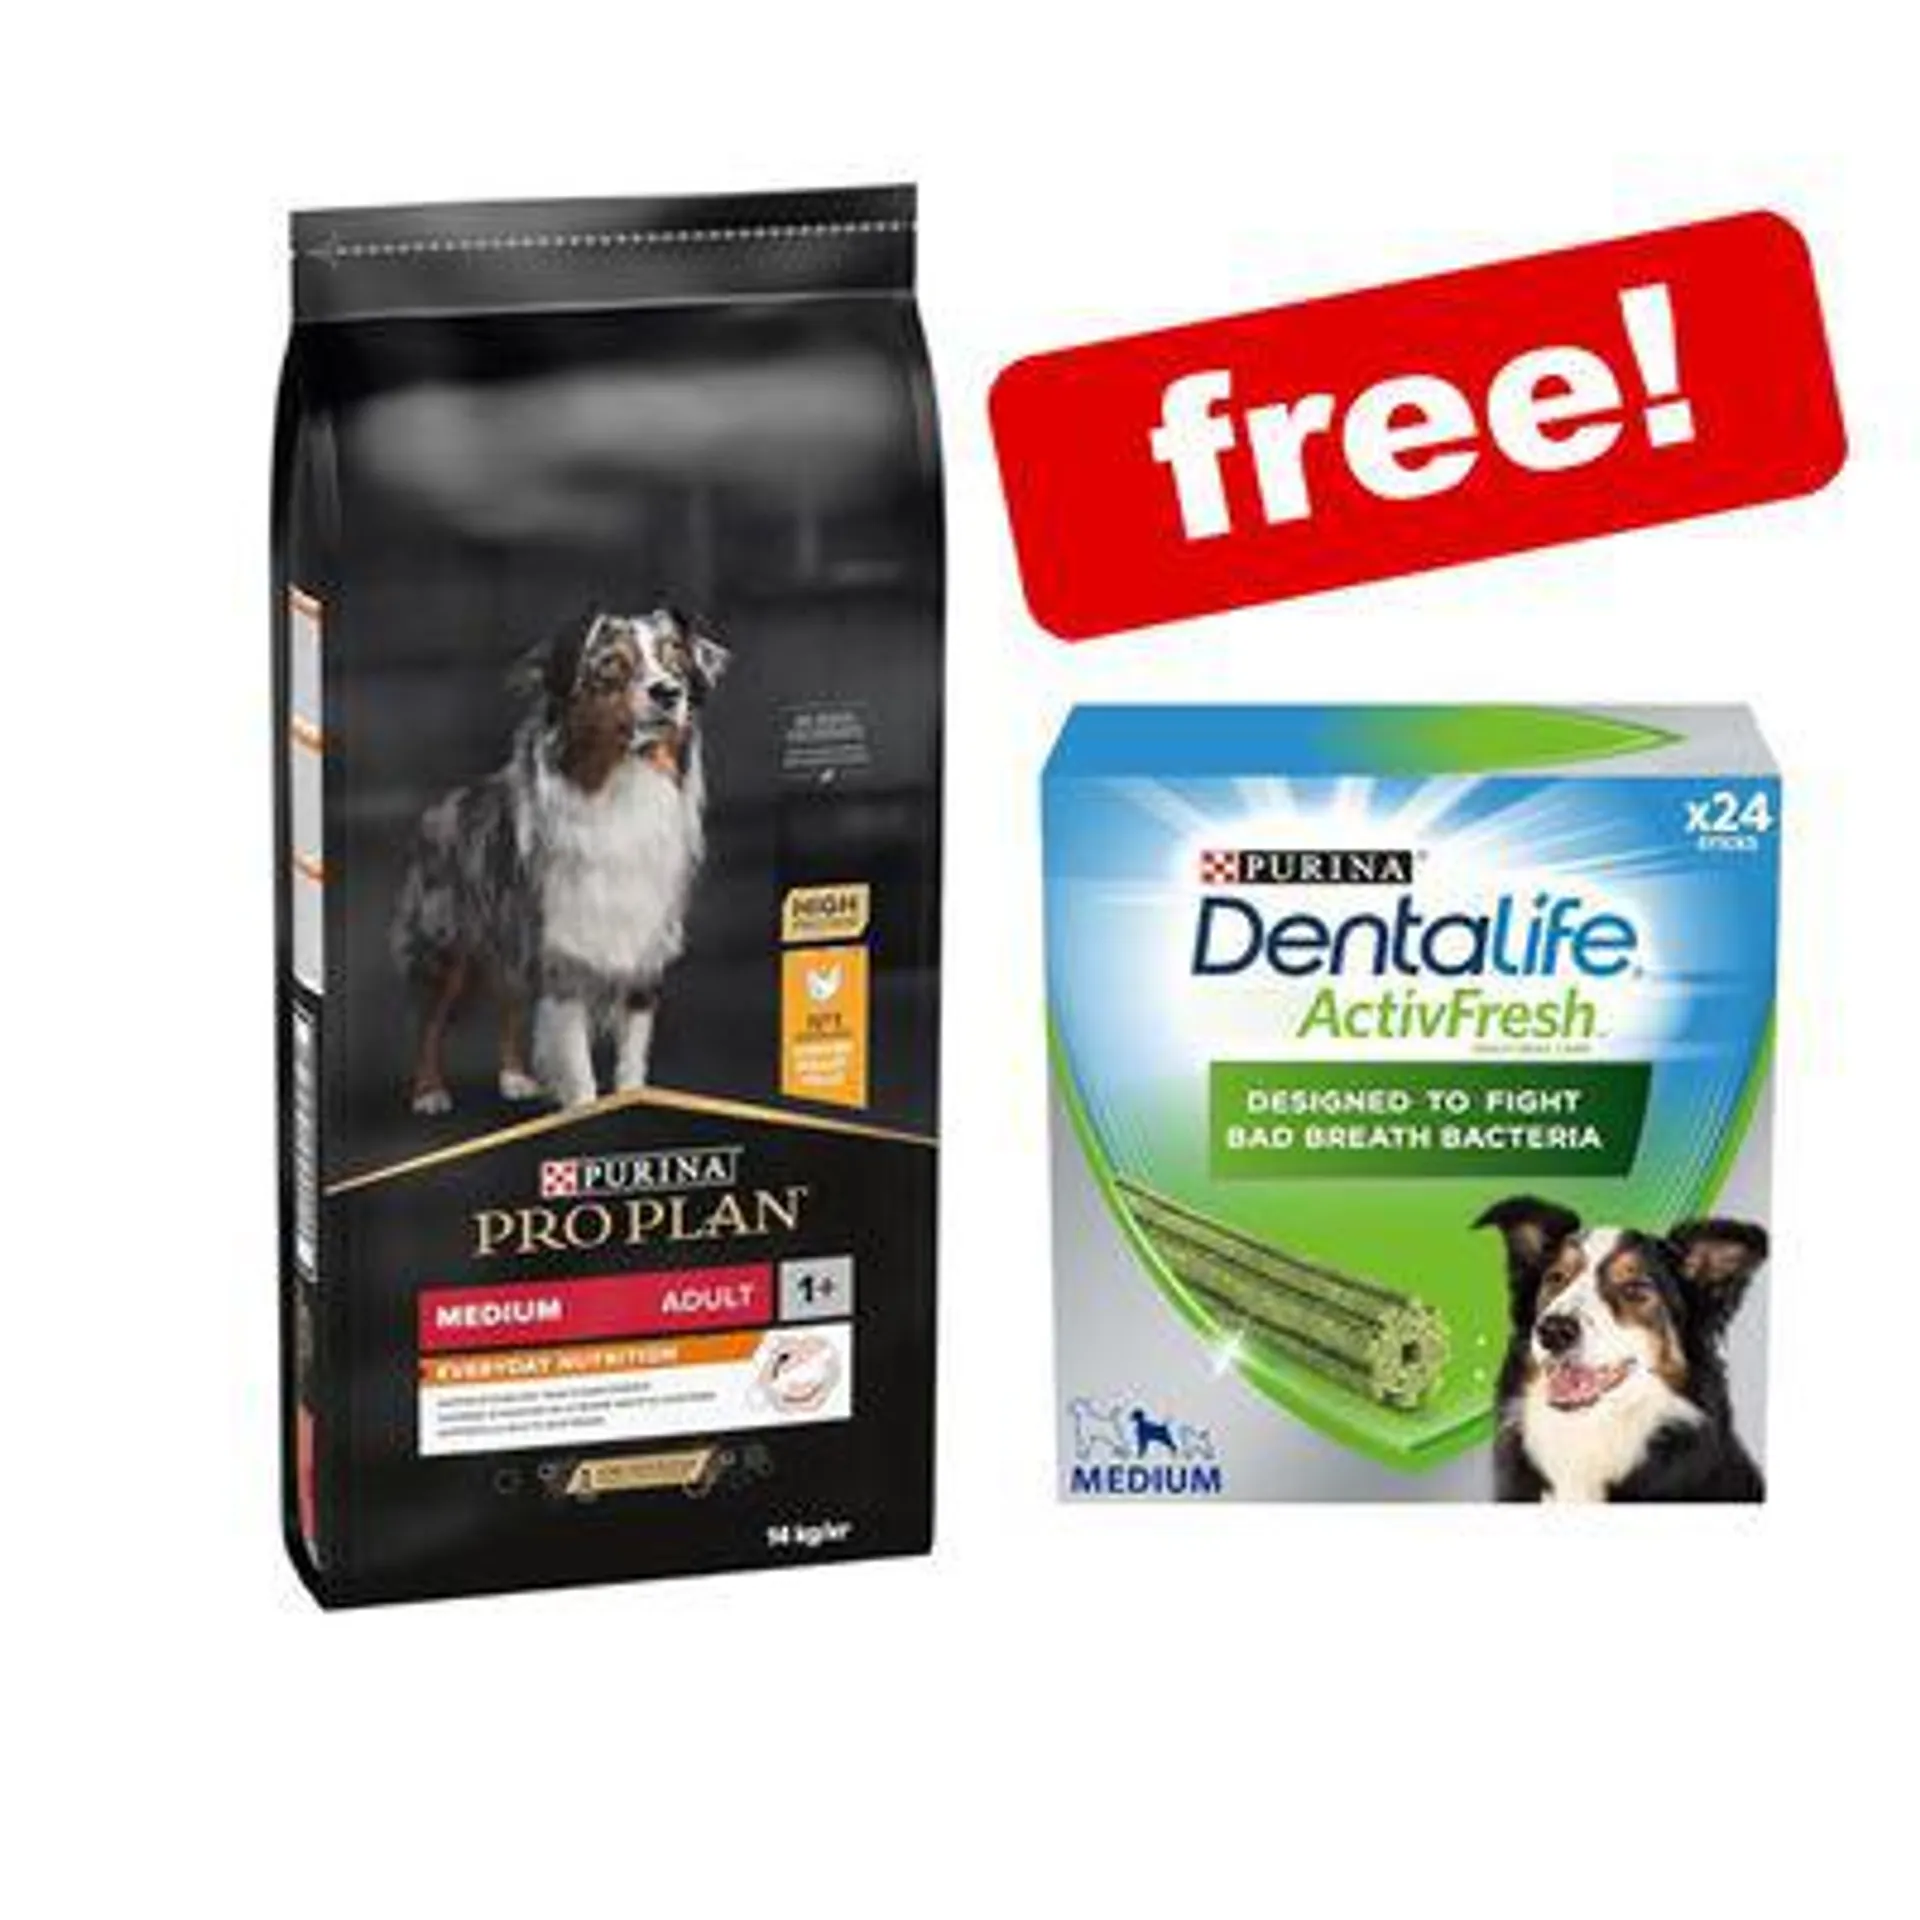 Purina Pro Plan Dry Dog Food + Dentalife Multipack Snacks Free! *